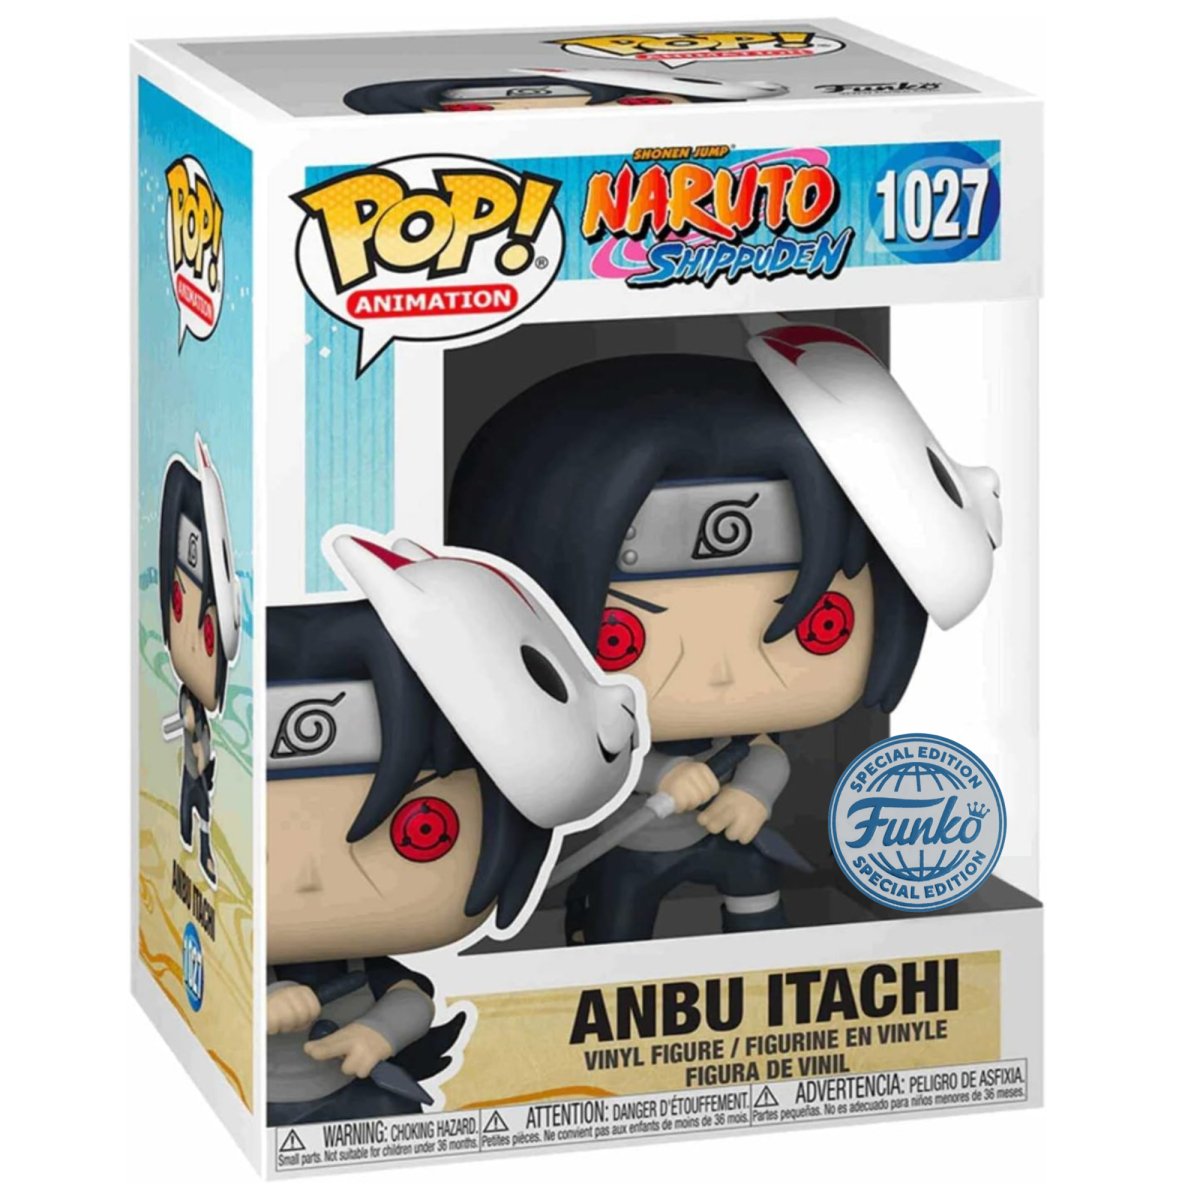 Naruto Shippuden - Anbu Itachi (Special Edition) #1027 - Funko Pop! Vinyl Anime - Persona Toys